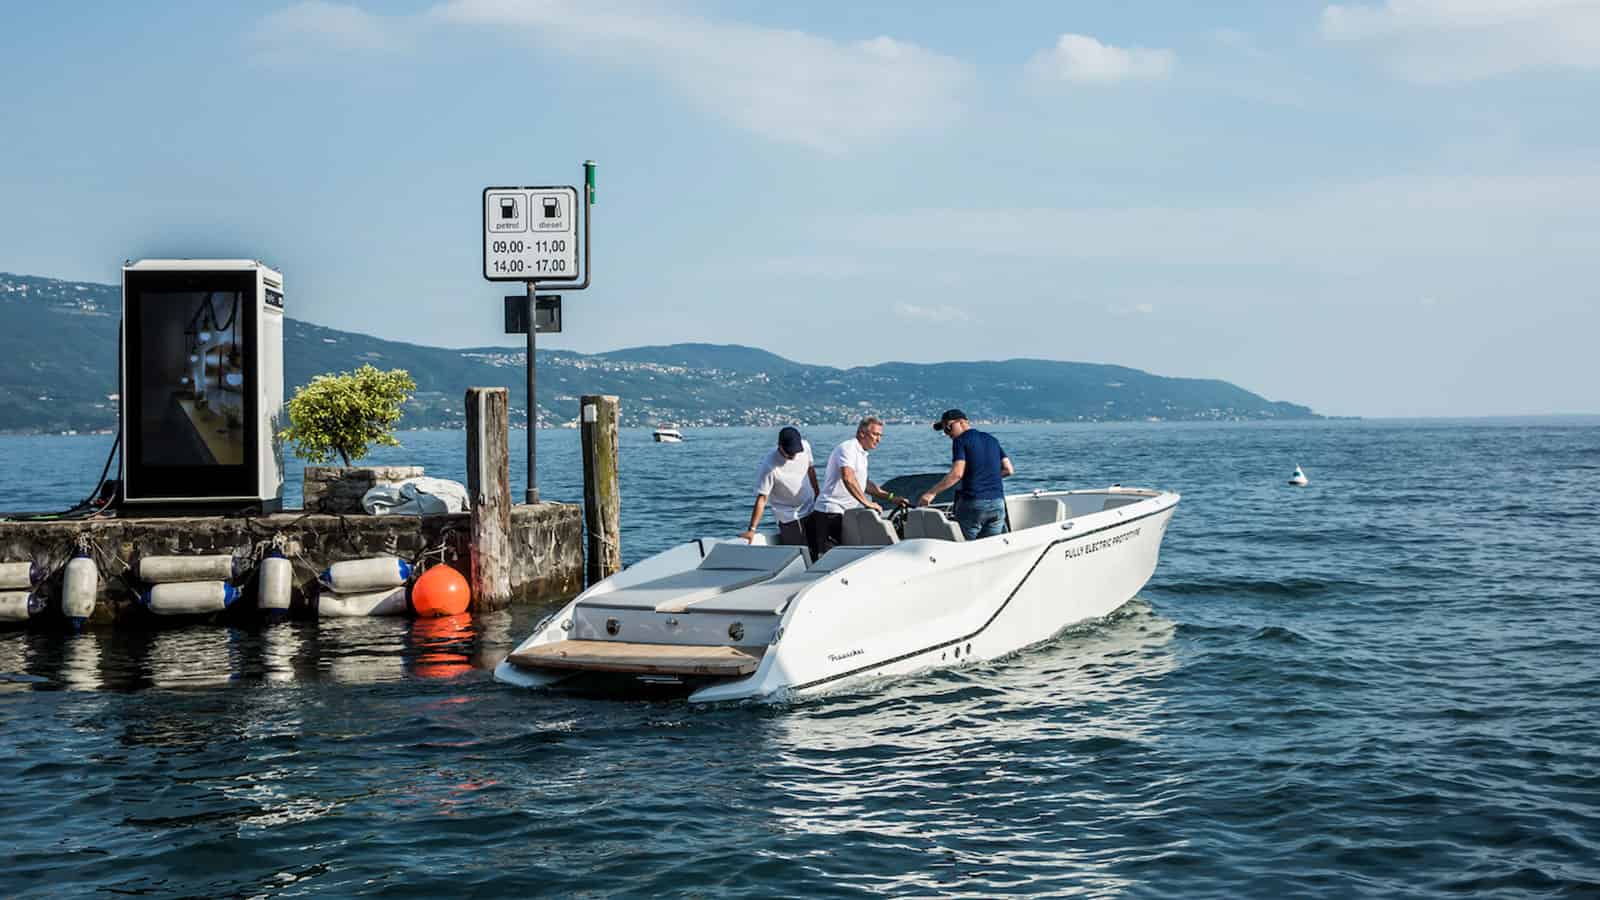 Porsche Electric Boat leaving charging dock